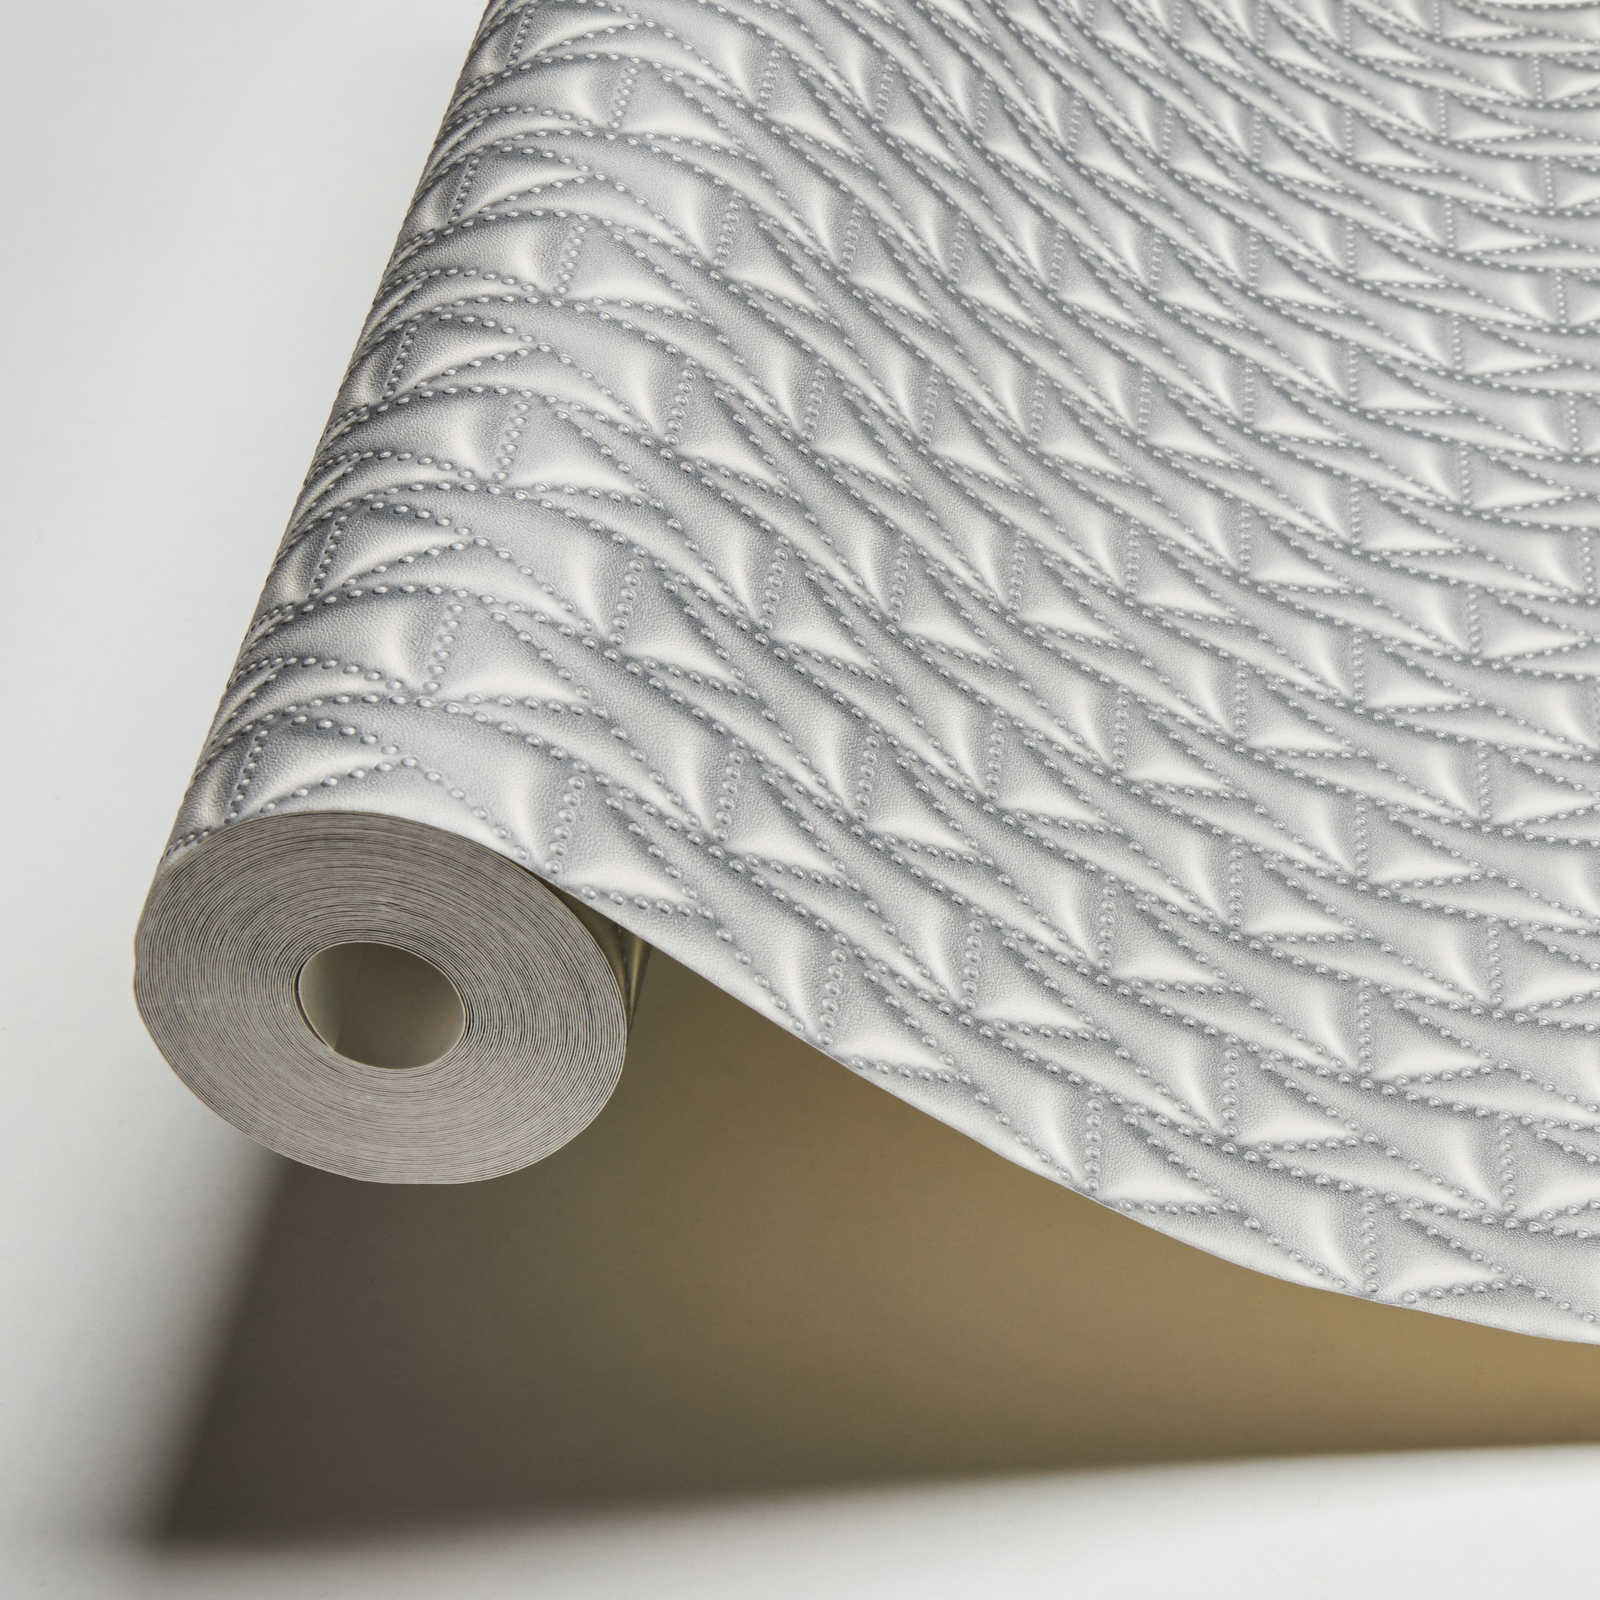             Non-woven wallpaper Karl LAGERFELD quilt bags design - grey
        